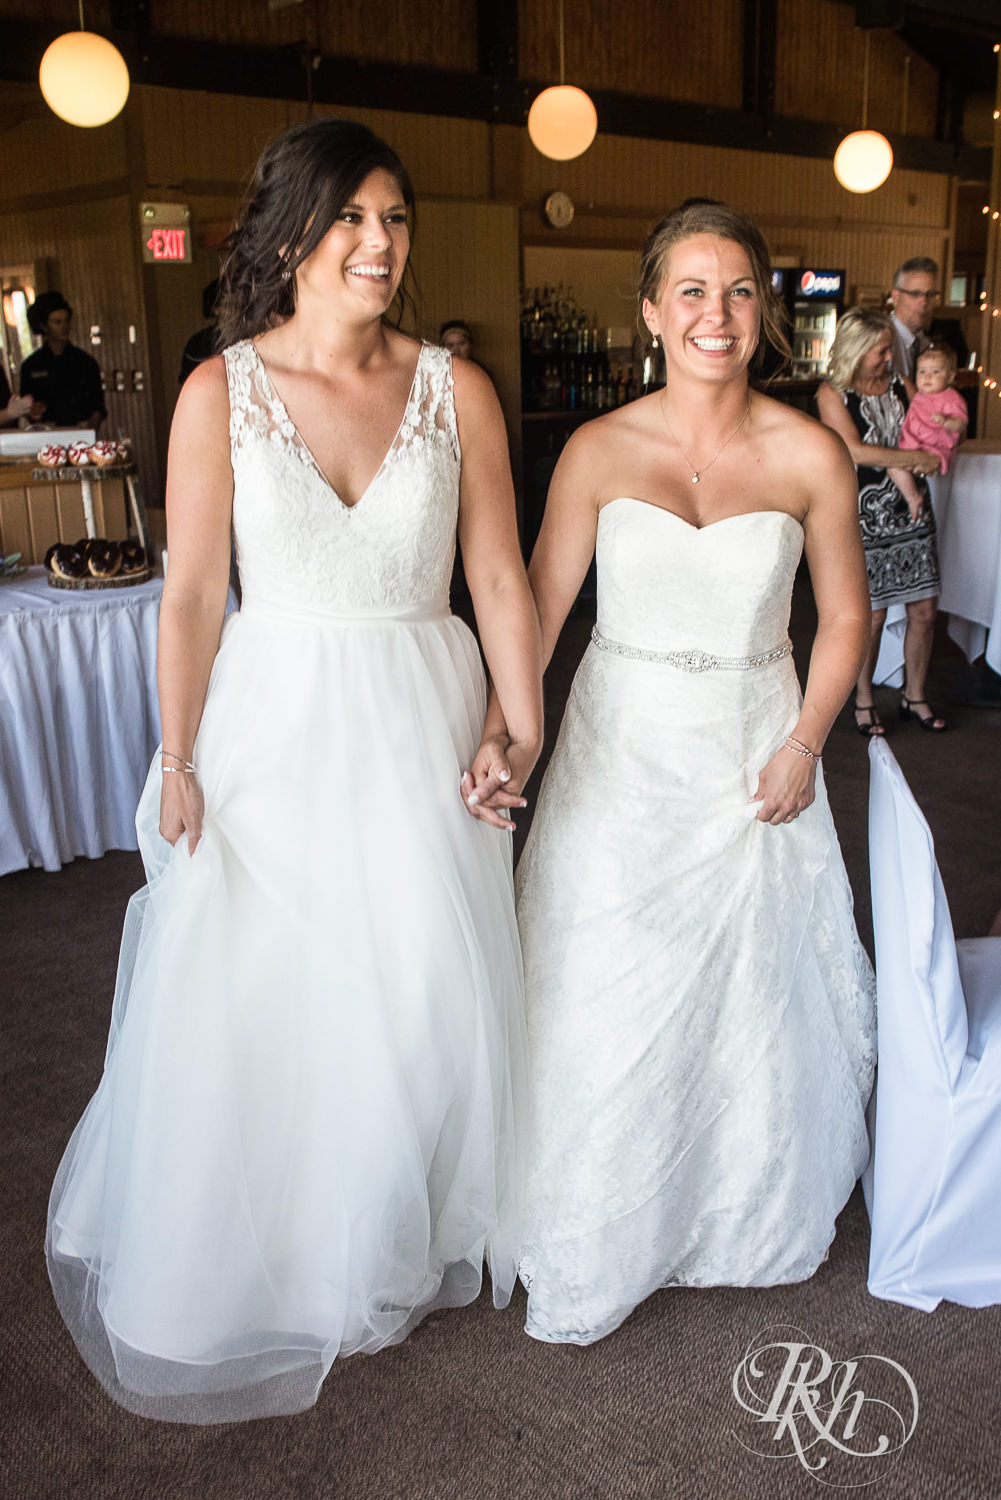 Lesbian brides enter their wedding reception at Spirit Mountain in Duluth, Minnesota.